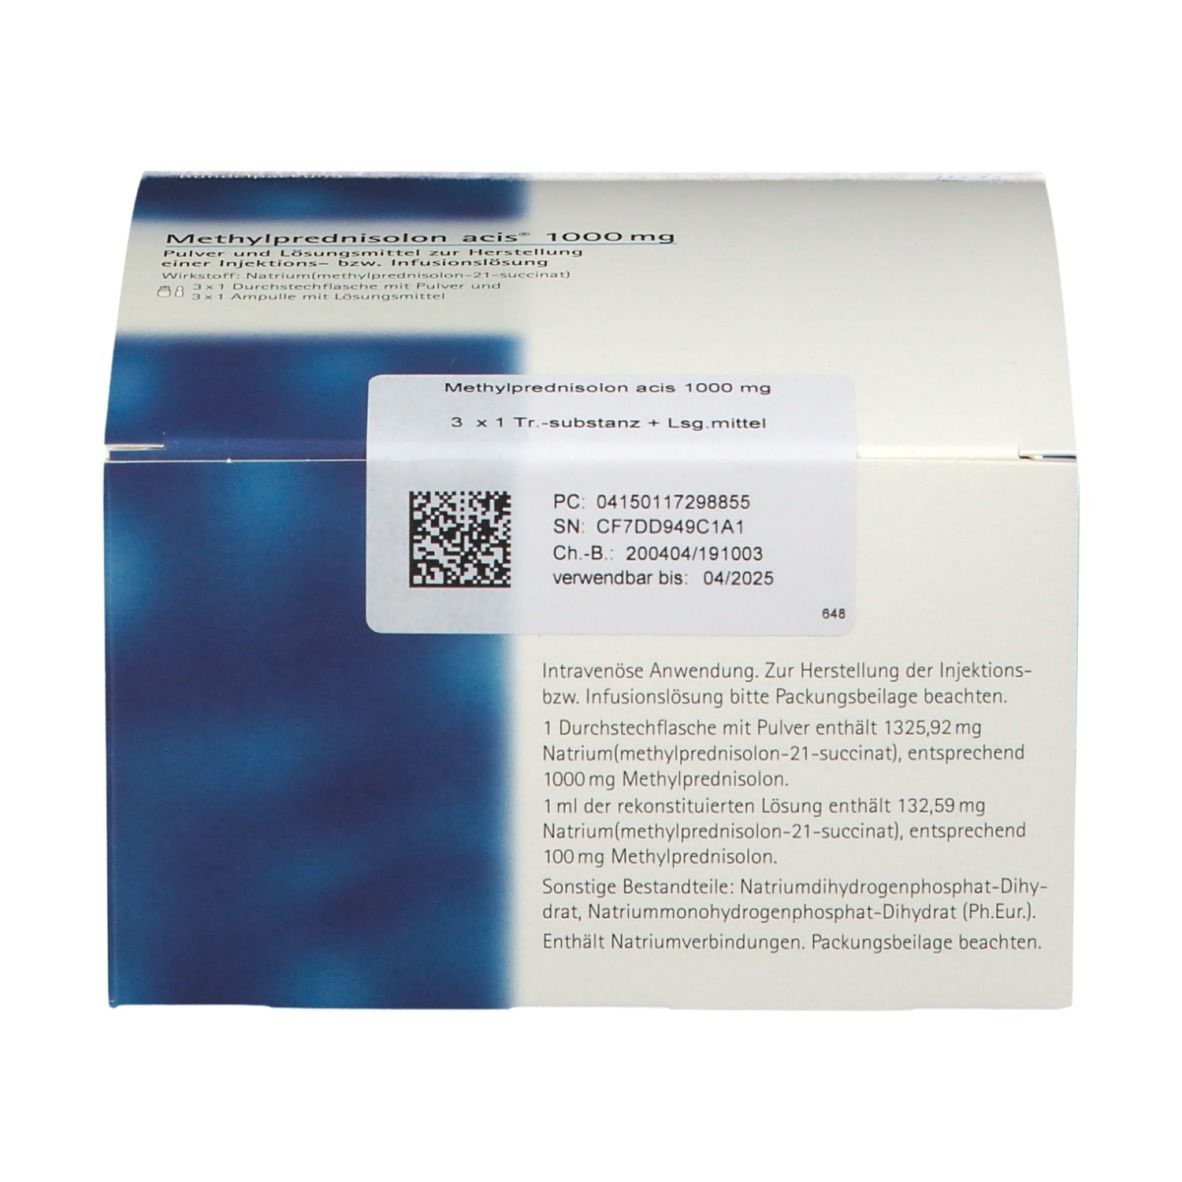 Methylprednisolon acis® 1000 mg